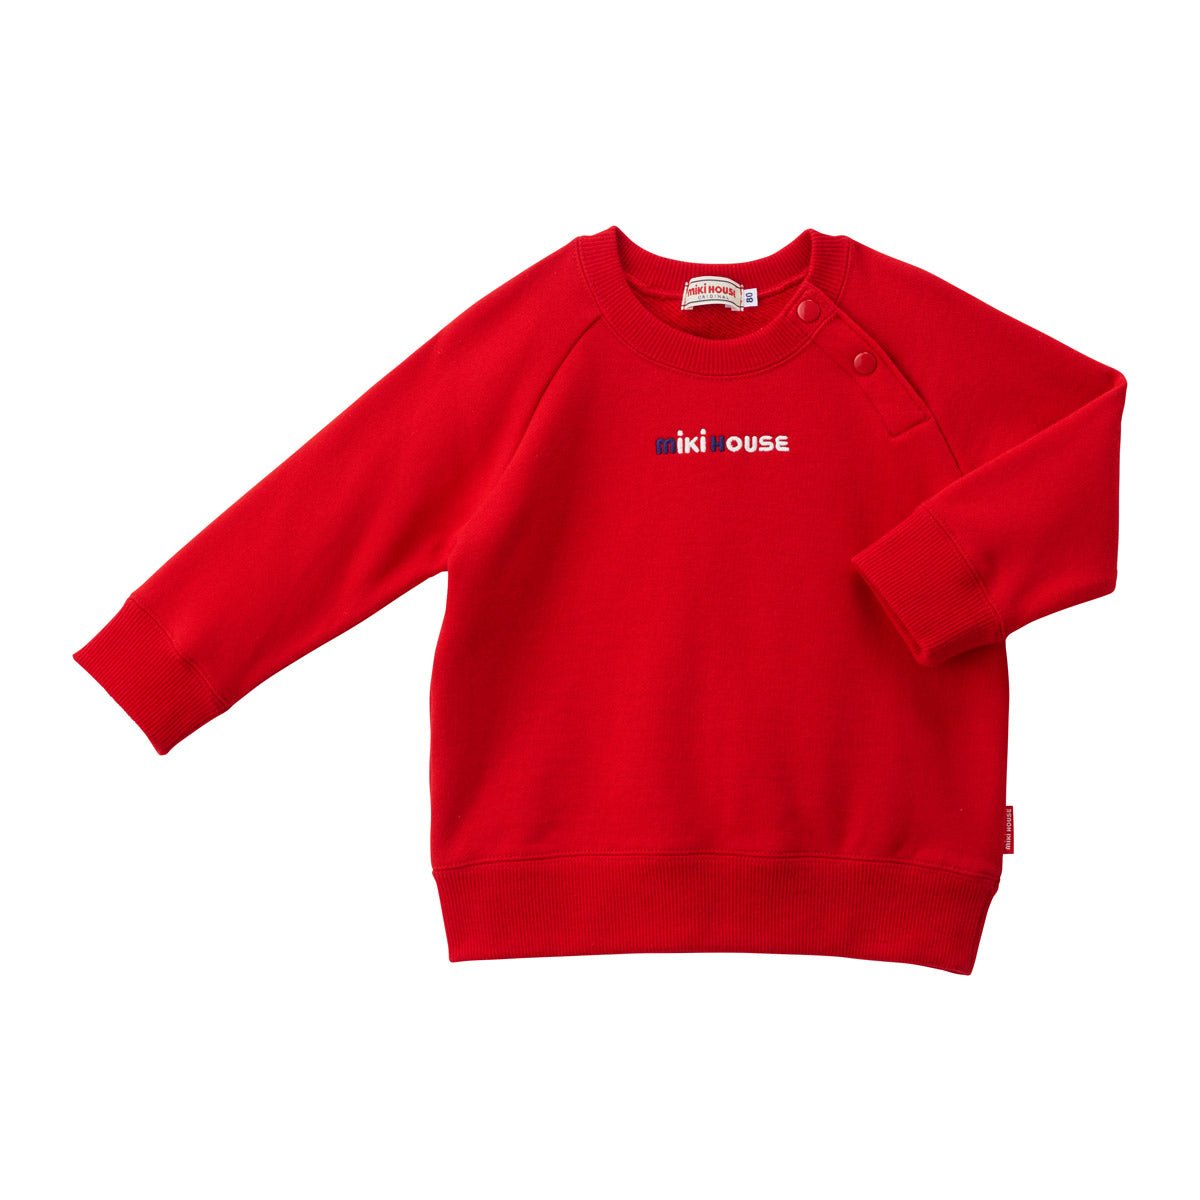 MIKI HOUSE Embroidered Logo Sweatshirt Classic - 10-5605-386-02-80